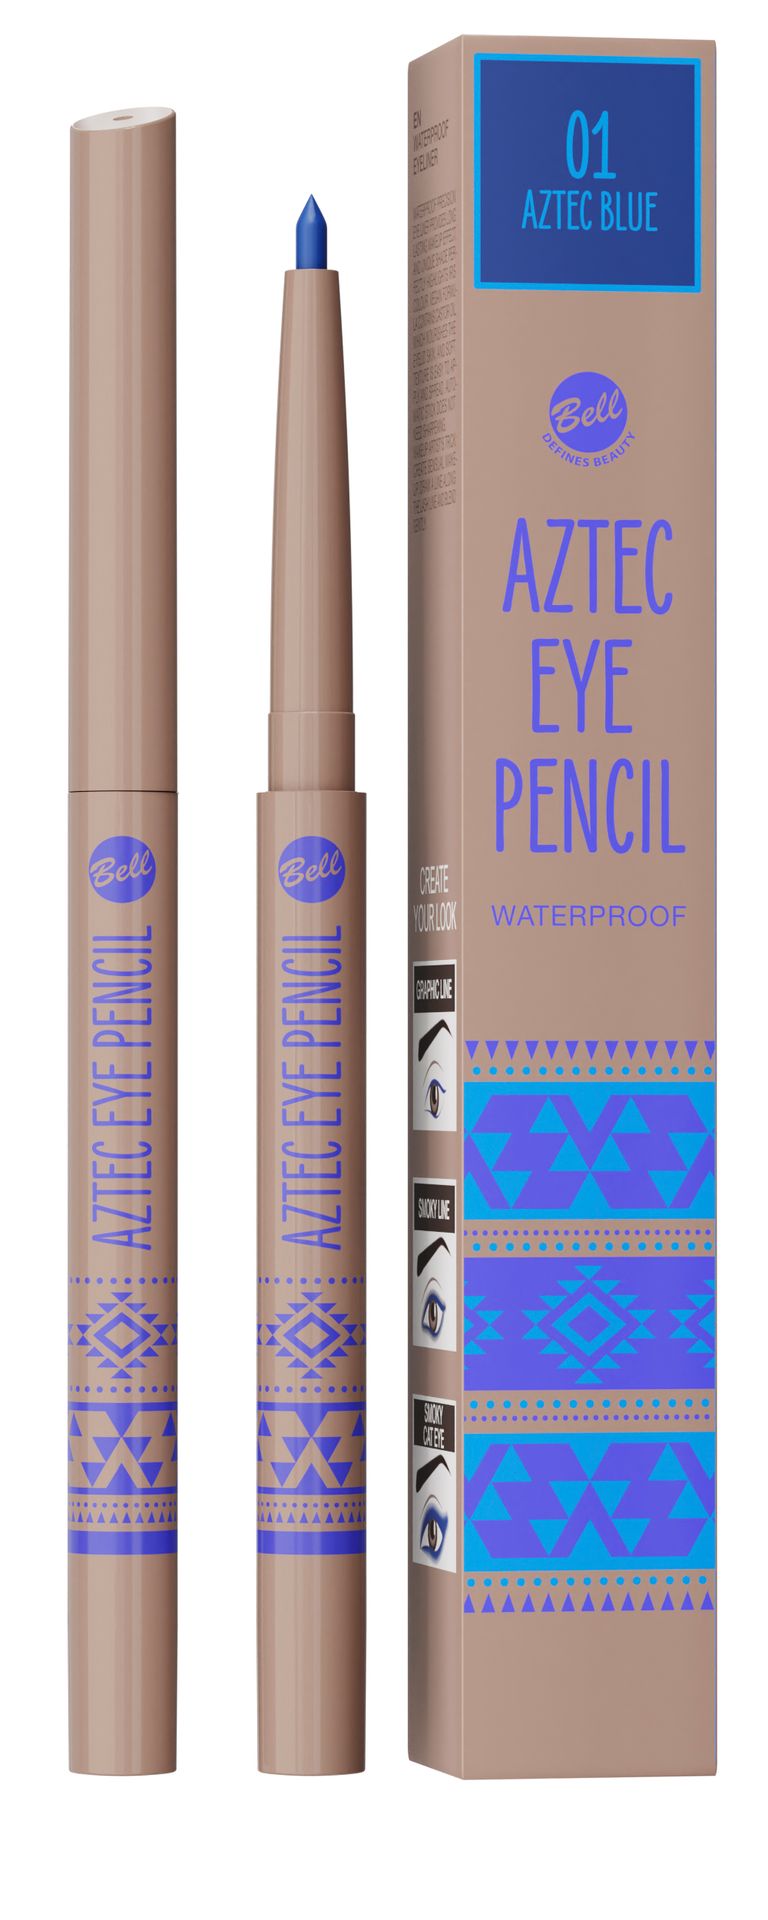 Bell konturówka do oczu Aztec Eye Pencil 001, 0,22g